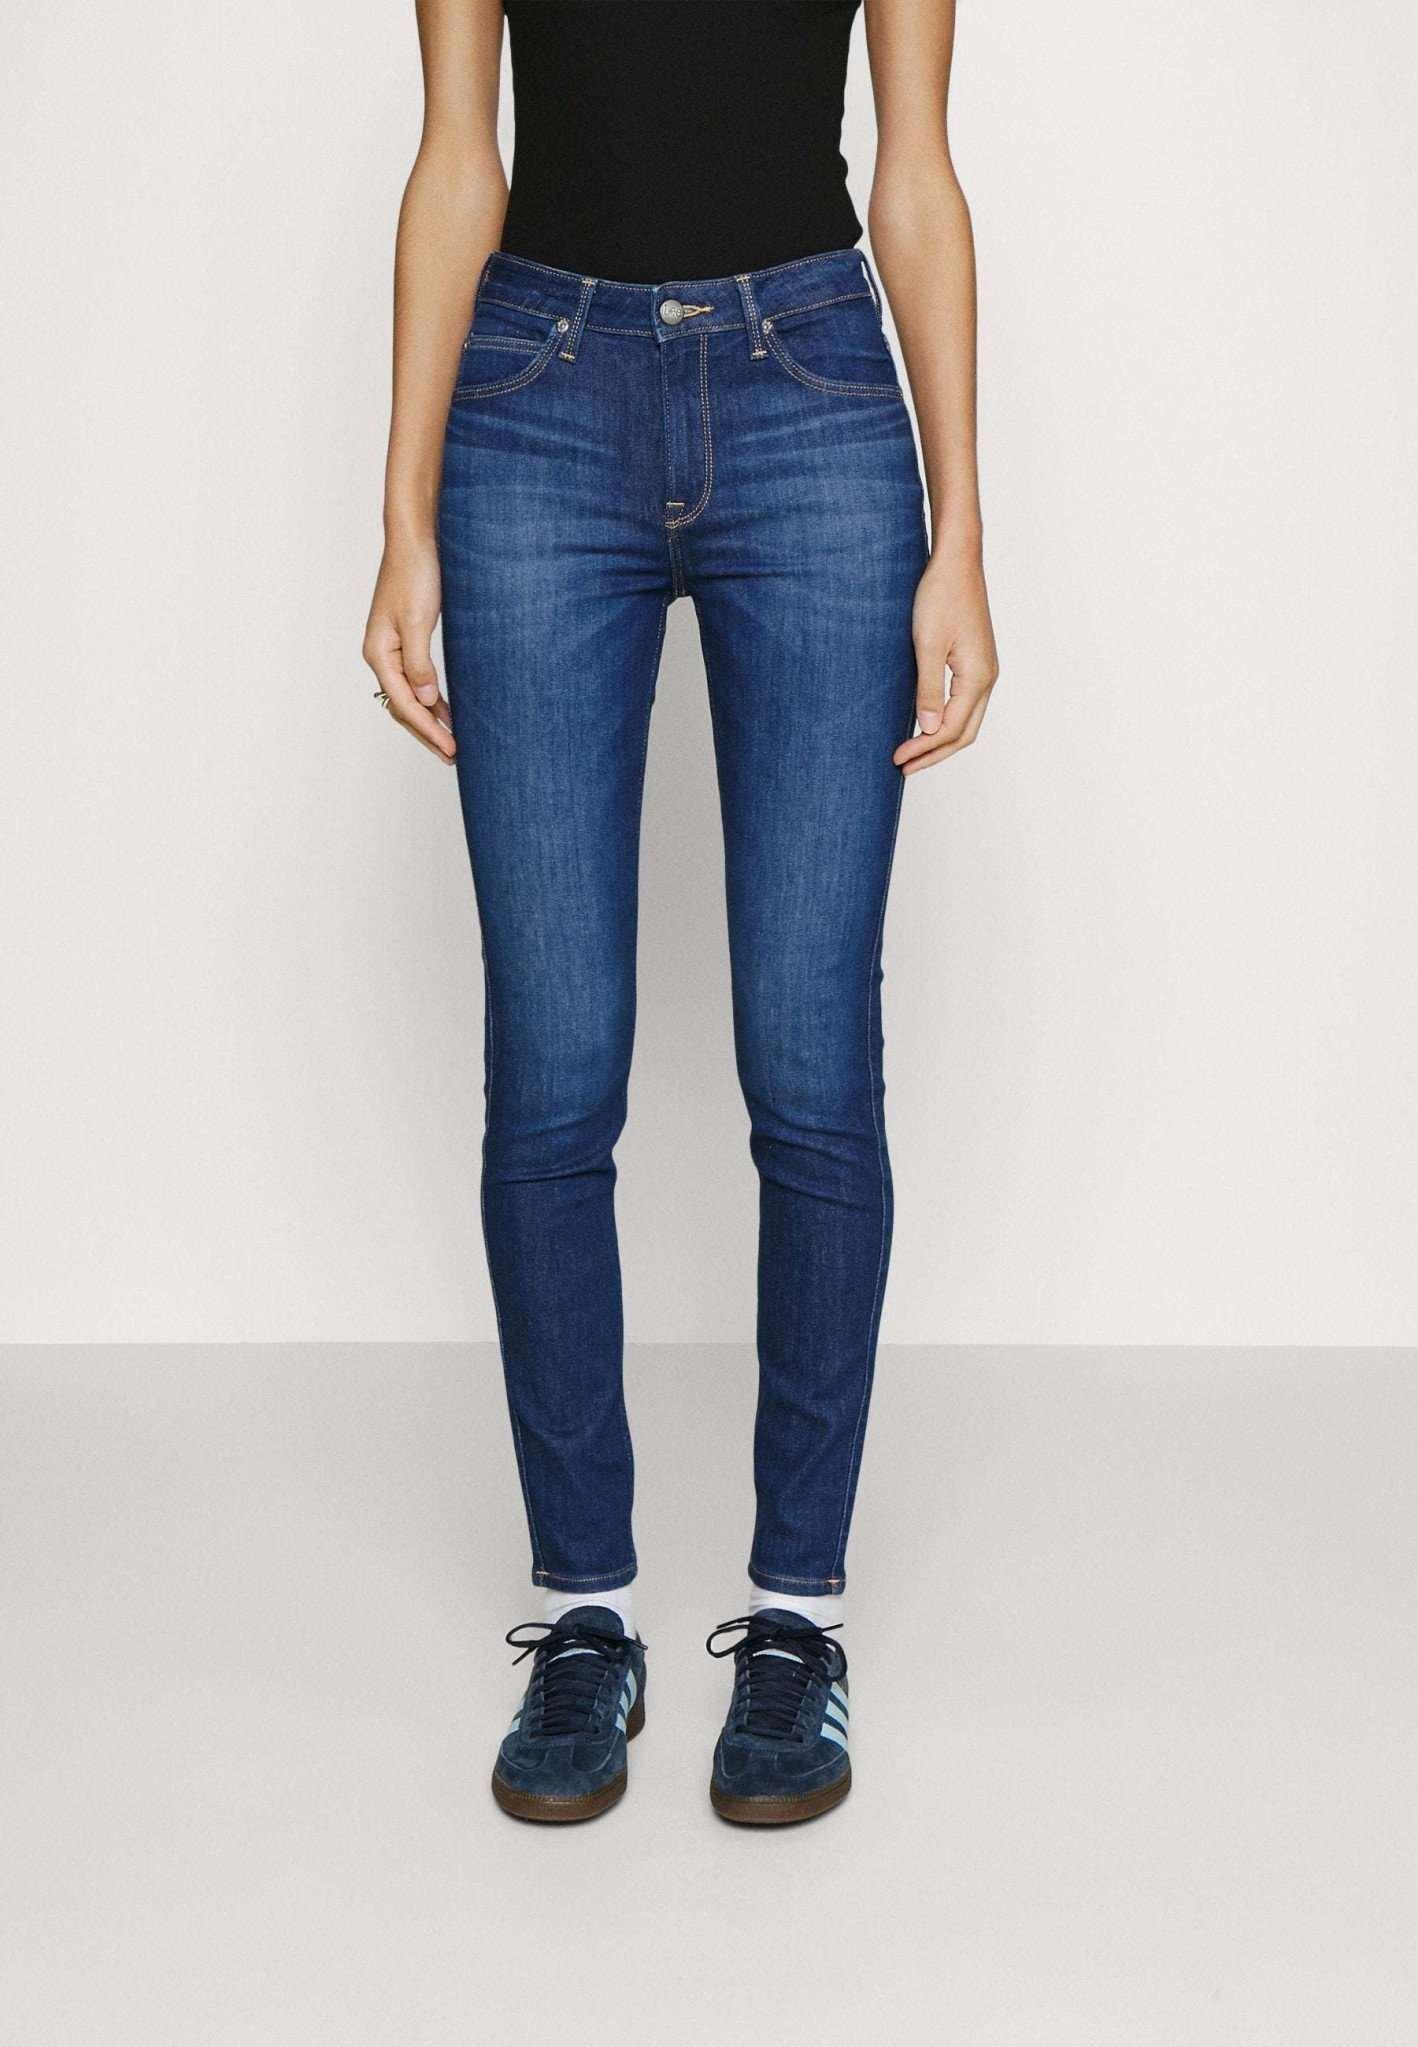 Jeans Skinny Fit Scarlett High Damen Blau L33/W27 von Lee